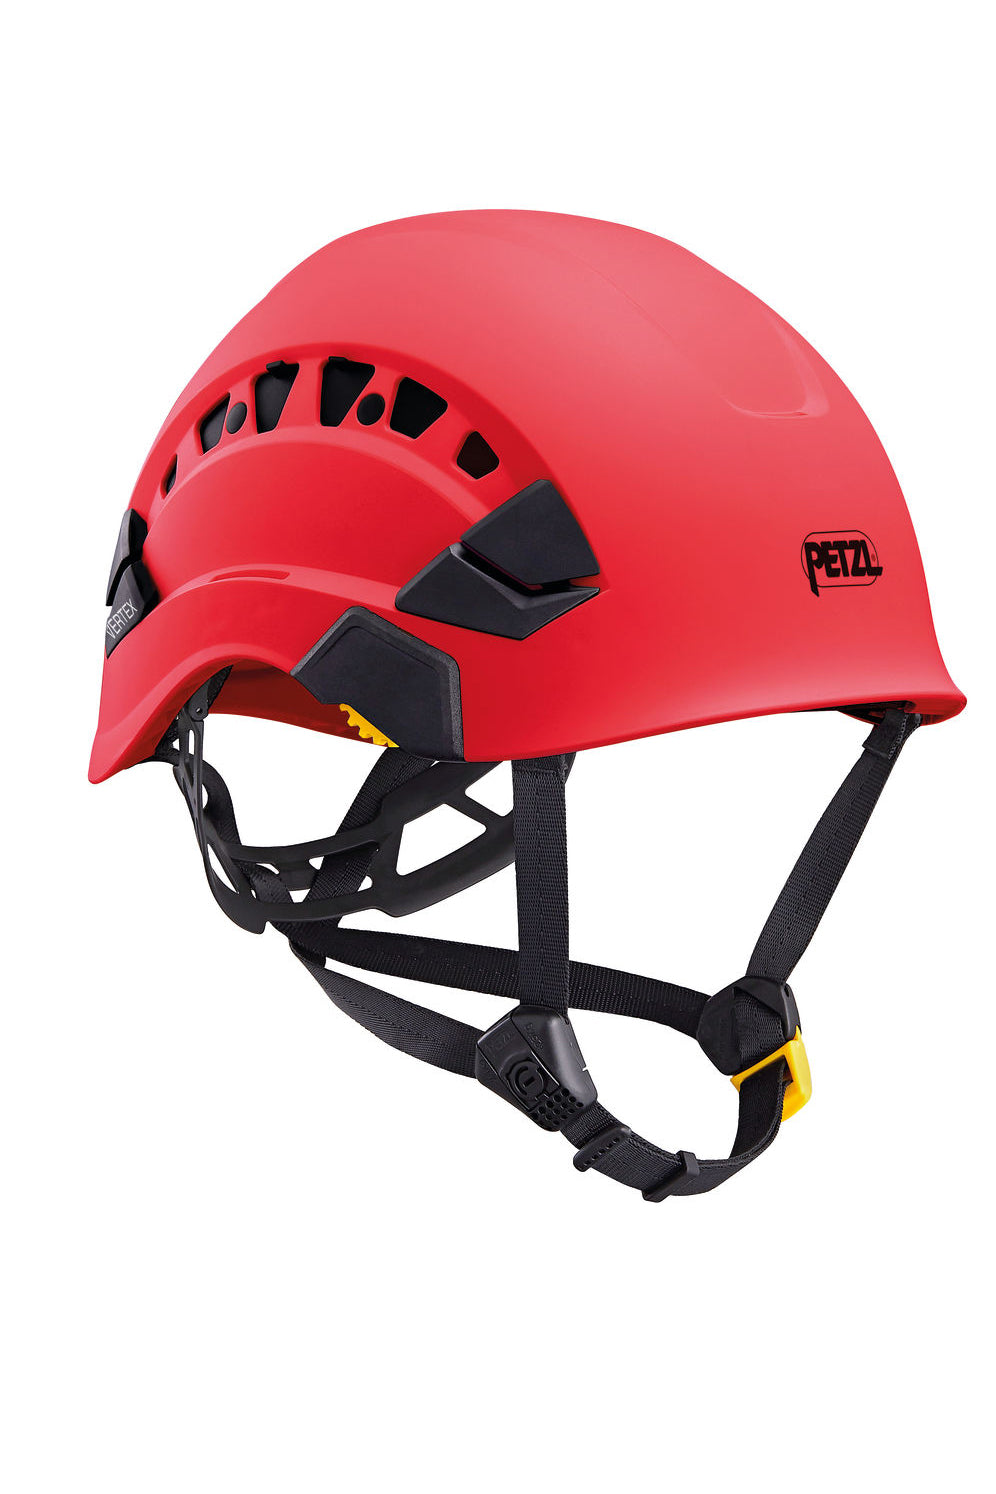 Petzl - Vertex Vent Helmet